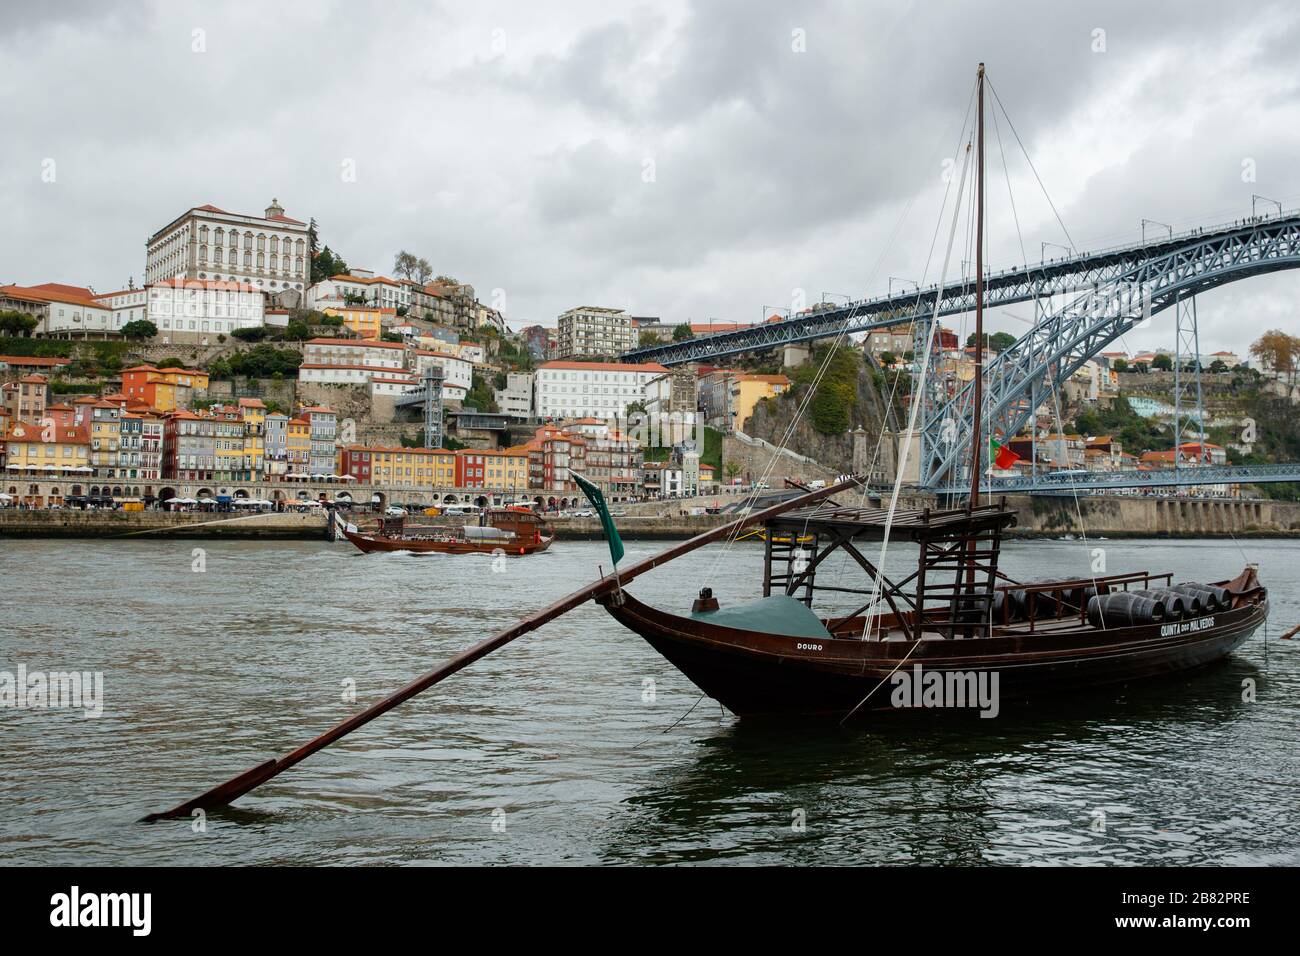 View of Cargo Boats on the River Douro in Porto, Portugal Stock Photo